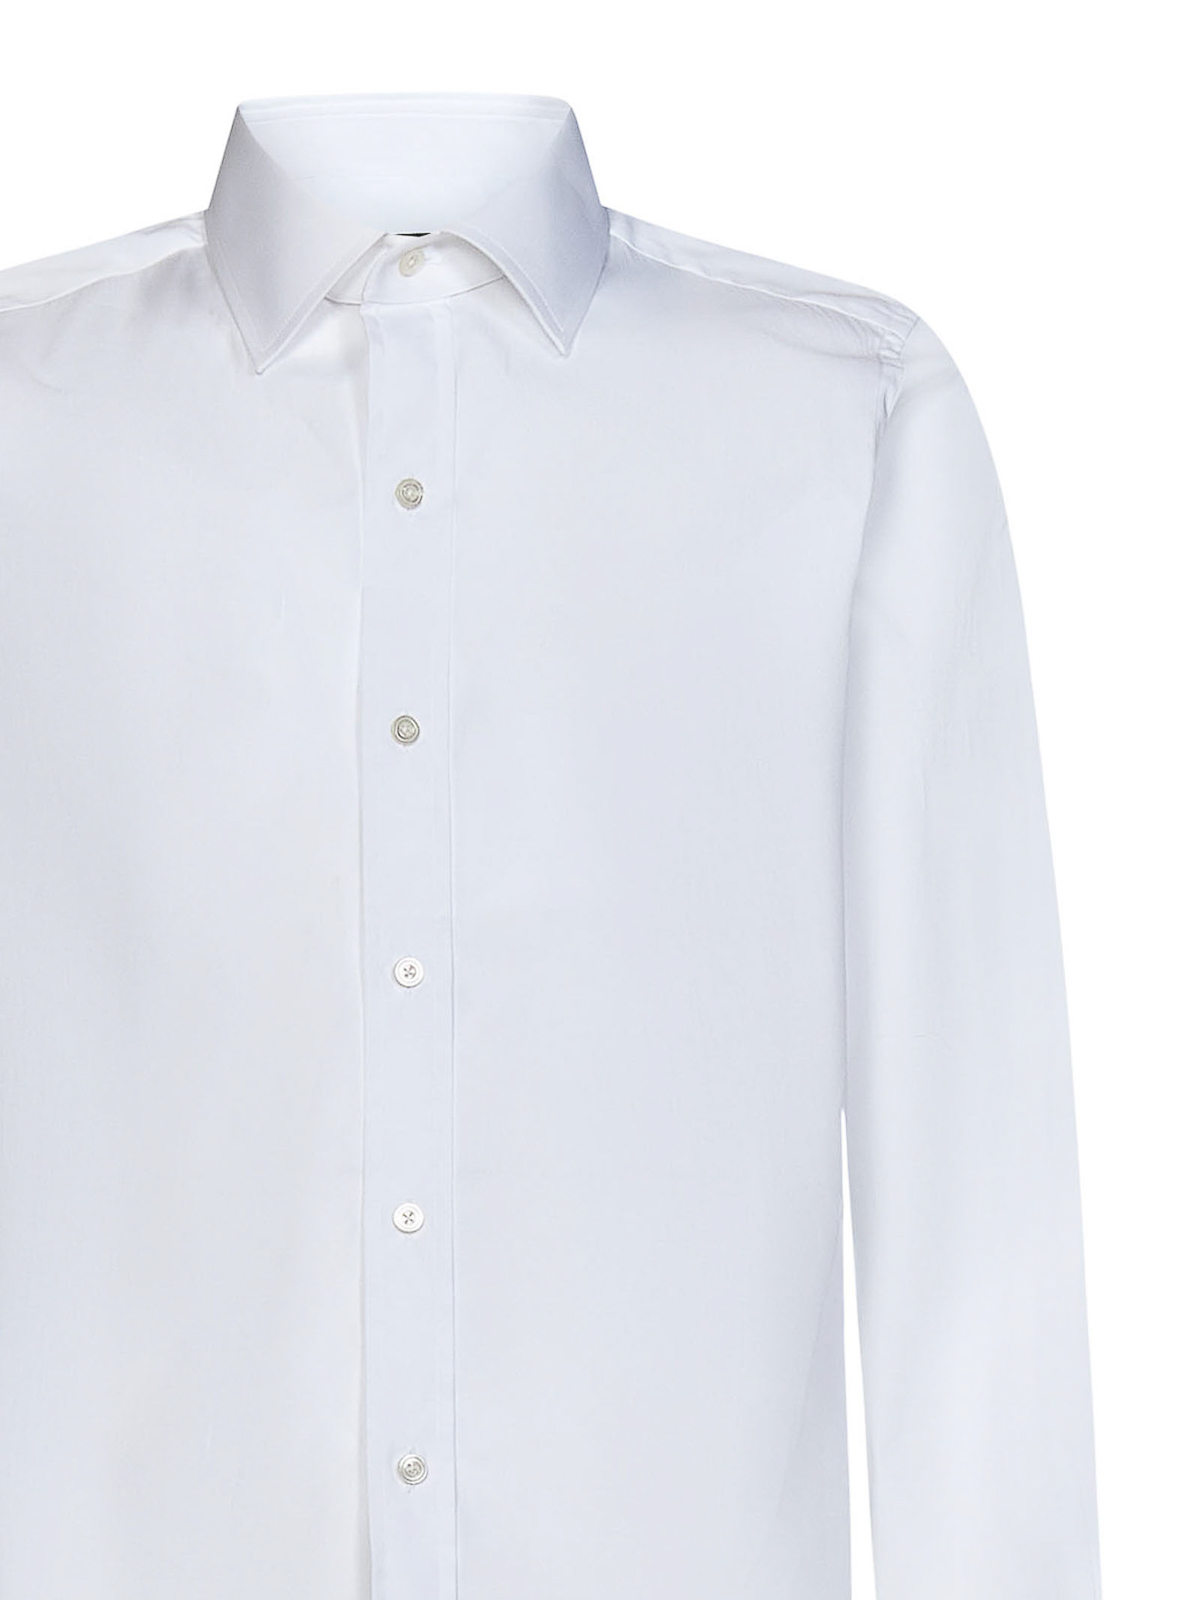 Shirts Tom Ford - Classic white cotton popl - HSBS01CGS11AW001